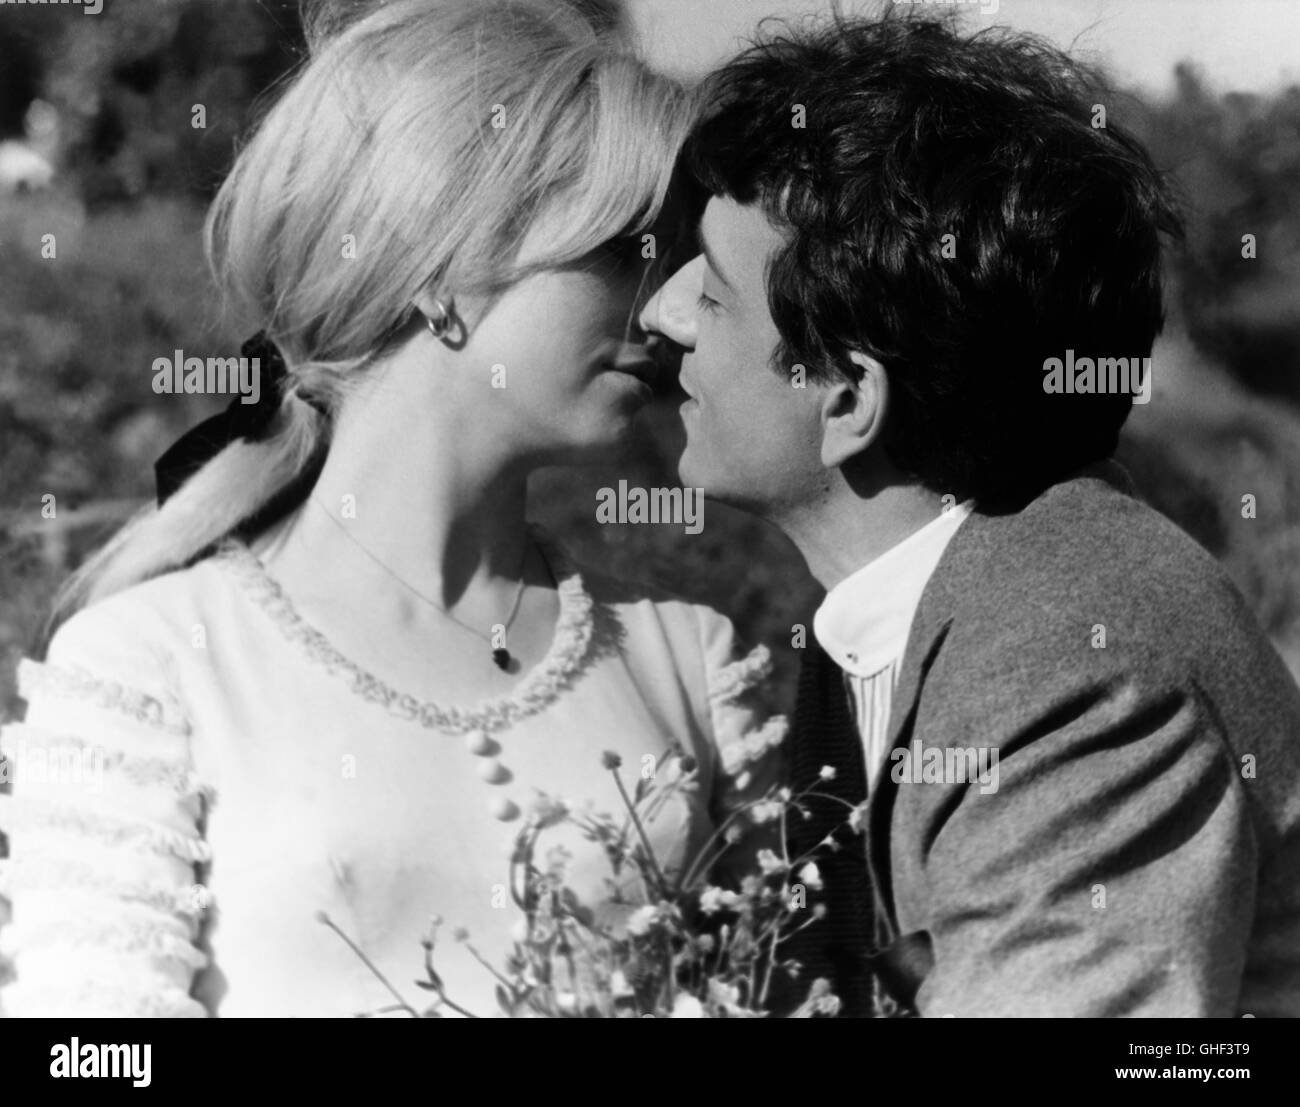 UN MONSIEUR DE COMPAGNIE Italien/Frankreich 1965 Philippe de Broca Love scene with CATHERINE DENEUVE (Isabelle) and JEAN-PIERRE CASSEL (Antoine) Regie: Philippe de Broca Stock Photo